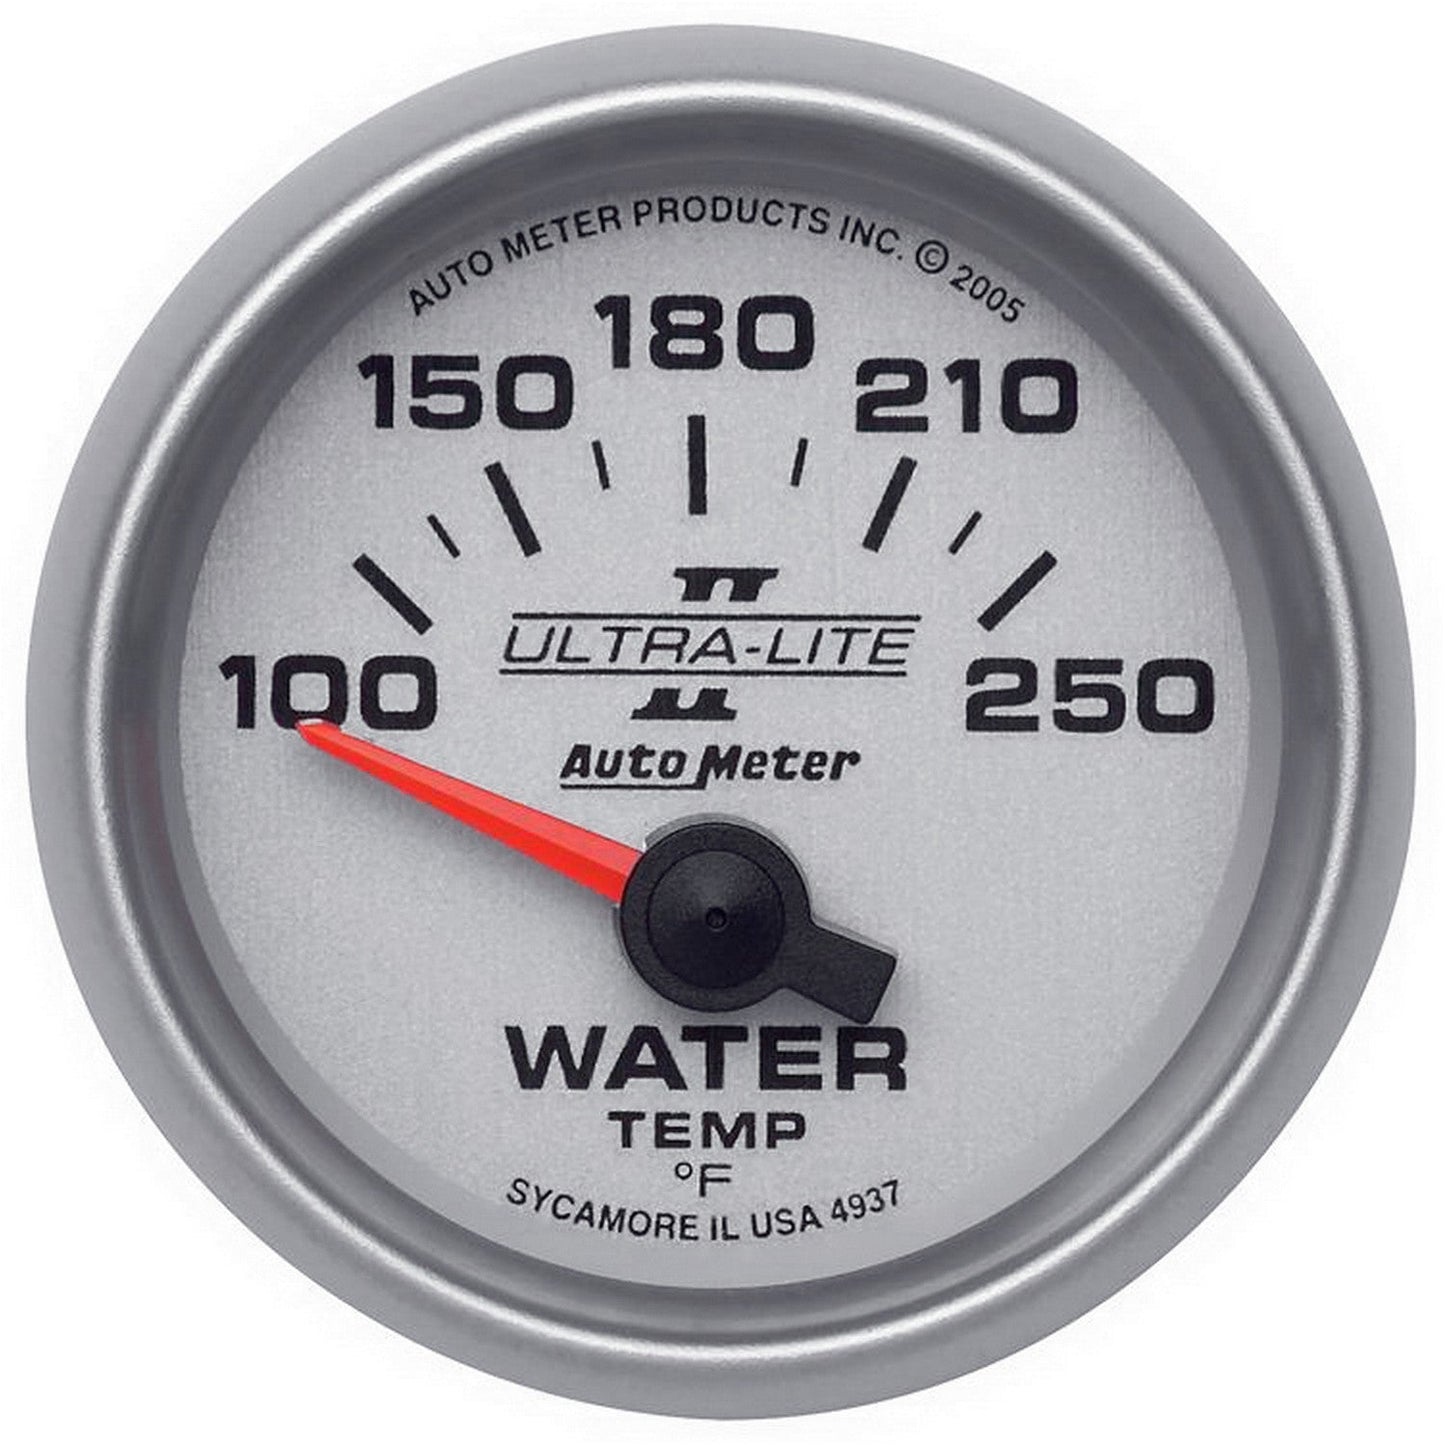 AutoMeter - 2-1/16" TEMPERATURA DEL AGUA, 100-250 °F, AIR-CORE, ULTRA-LITE II (4937) 